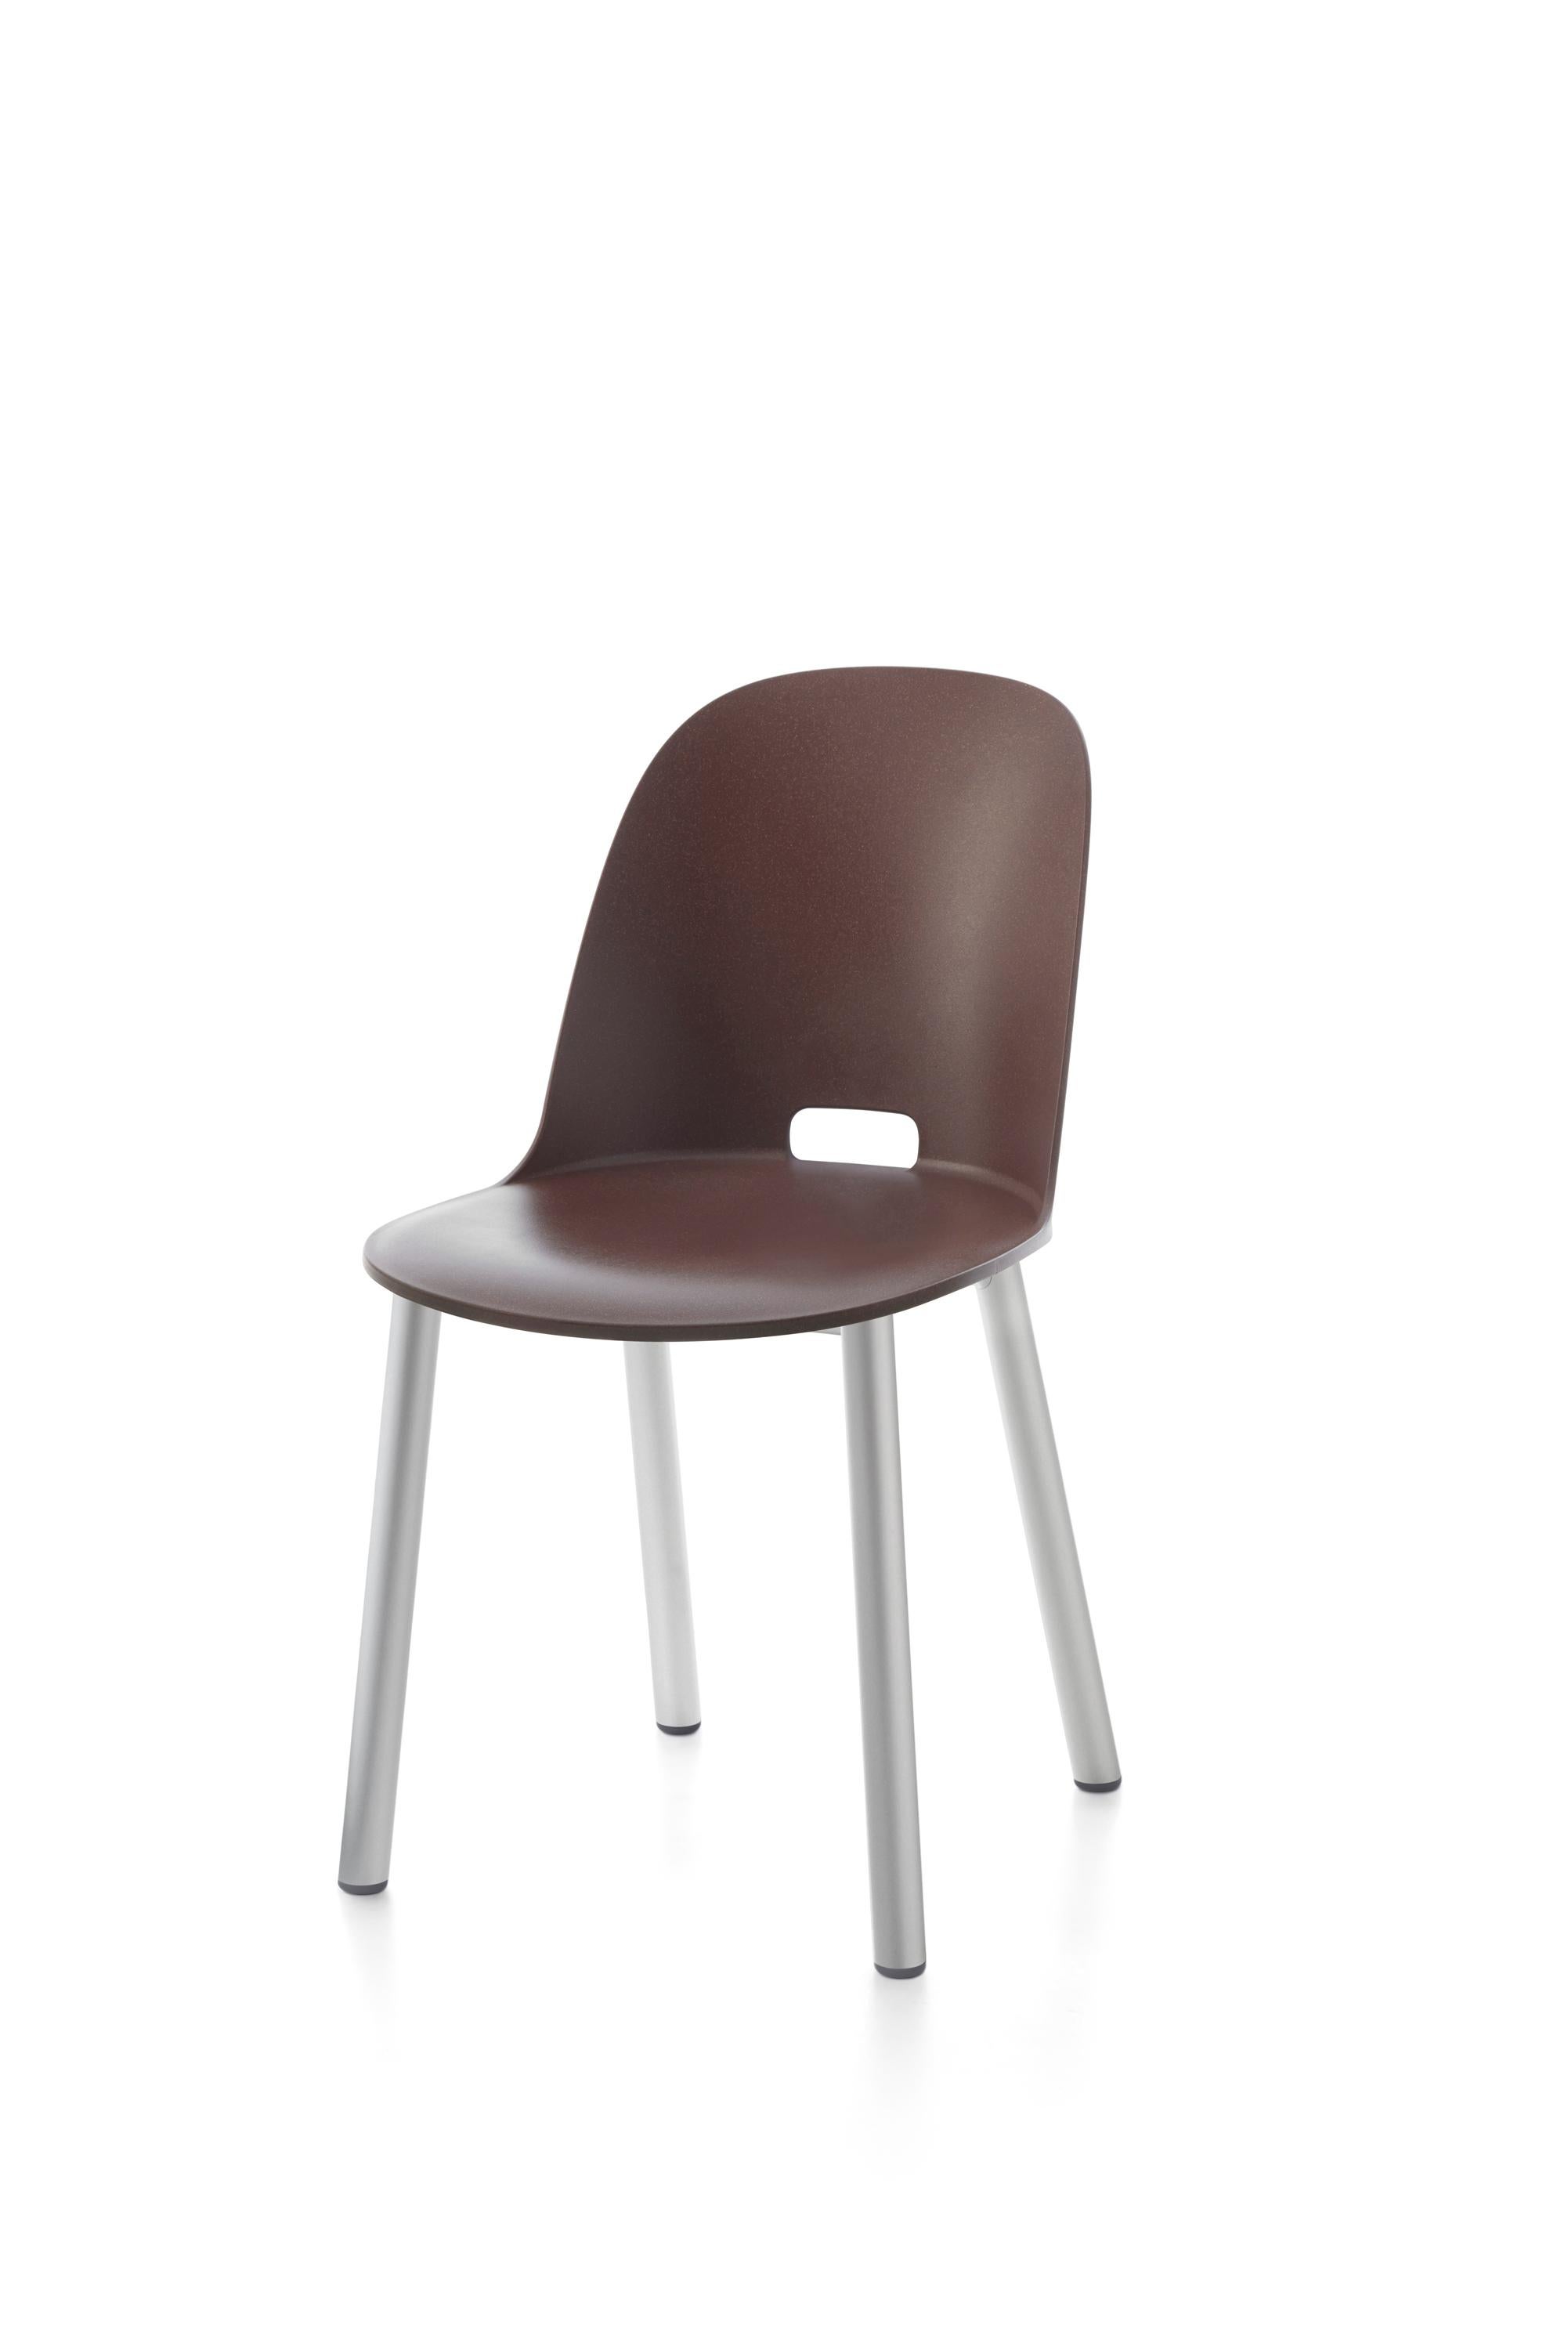 For Sale: Brown (Alfi Dark Brown) Emeco Alfi High Back Chair with Aluminum Frame by Jasper Morrison